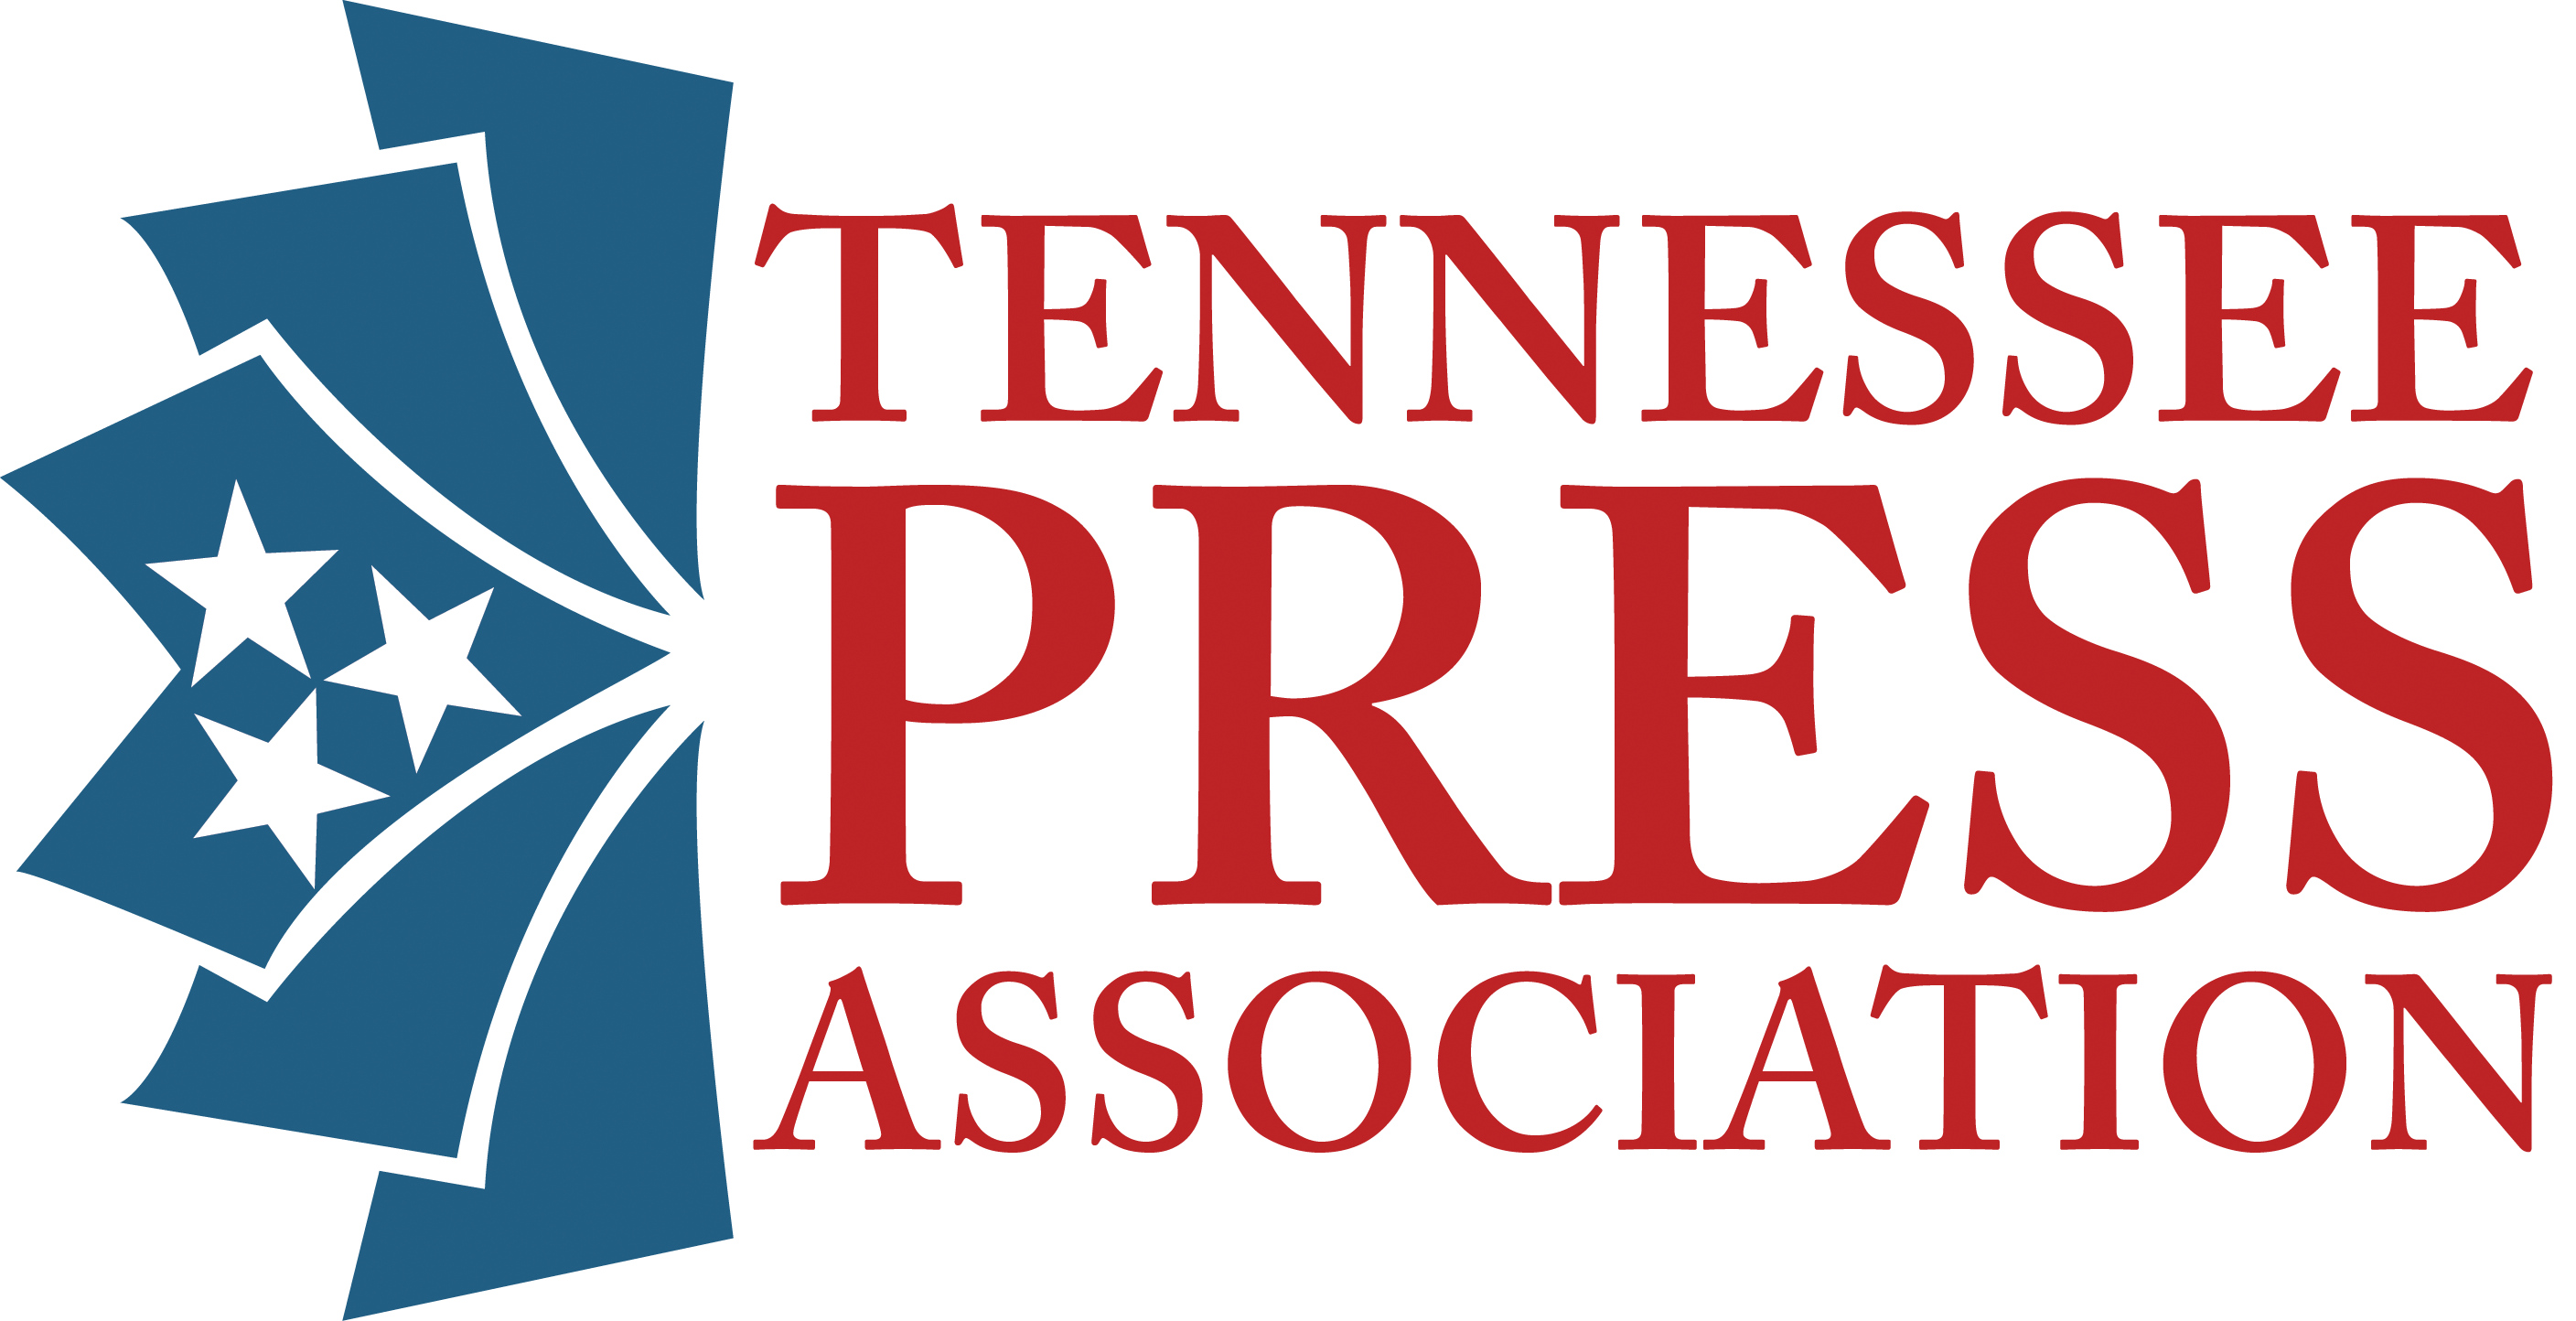 Tennessee Press Association